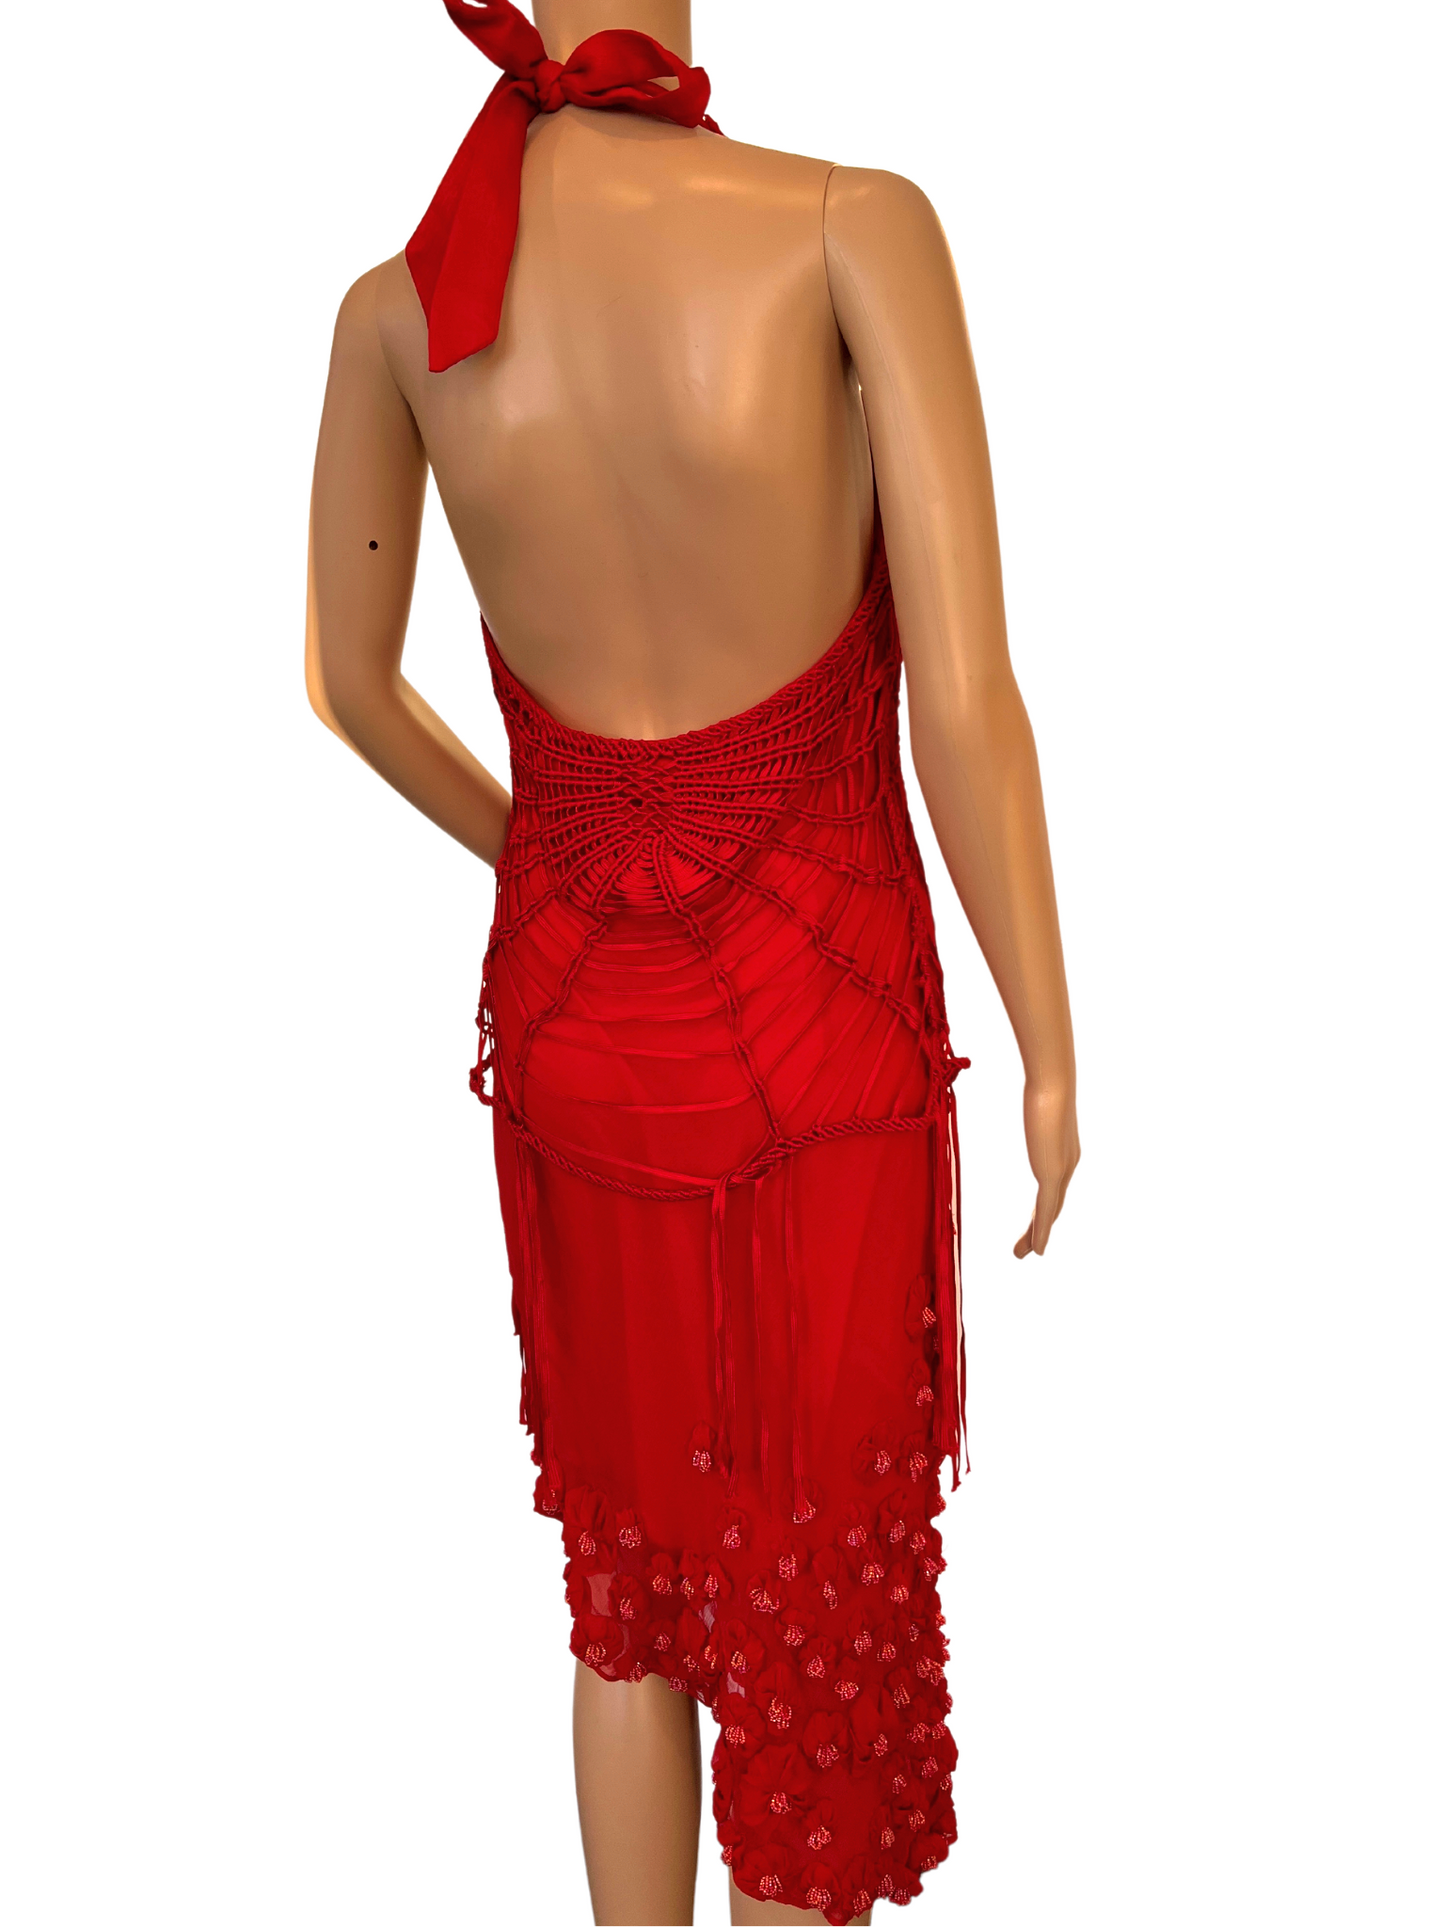 Red Dress (7)